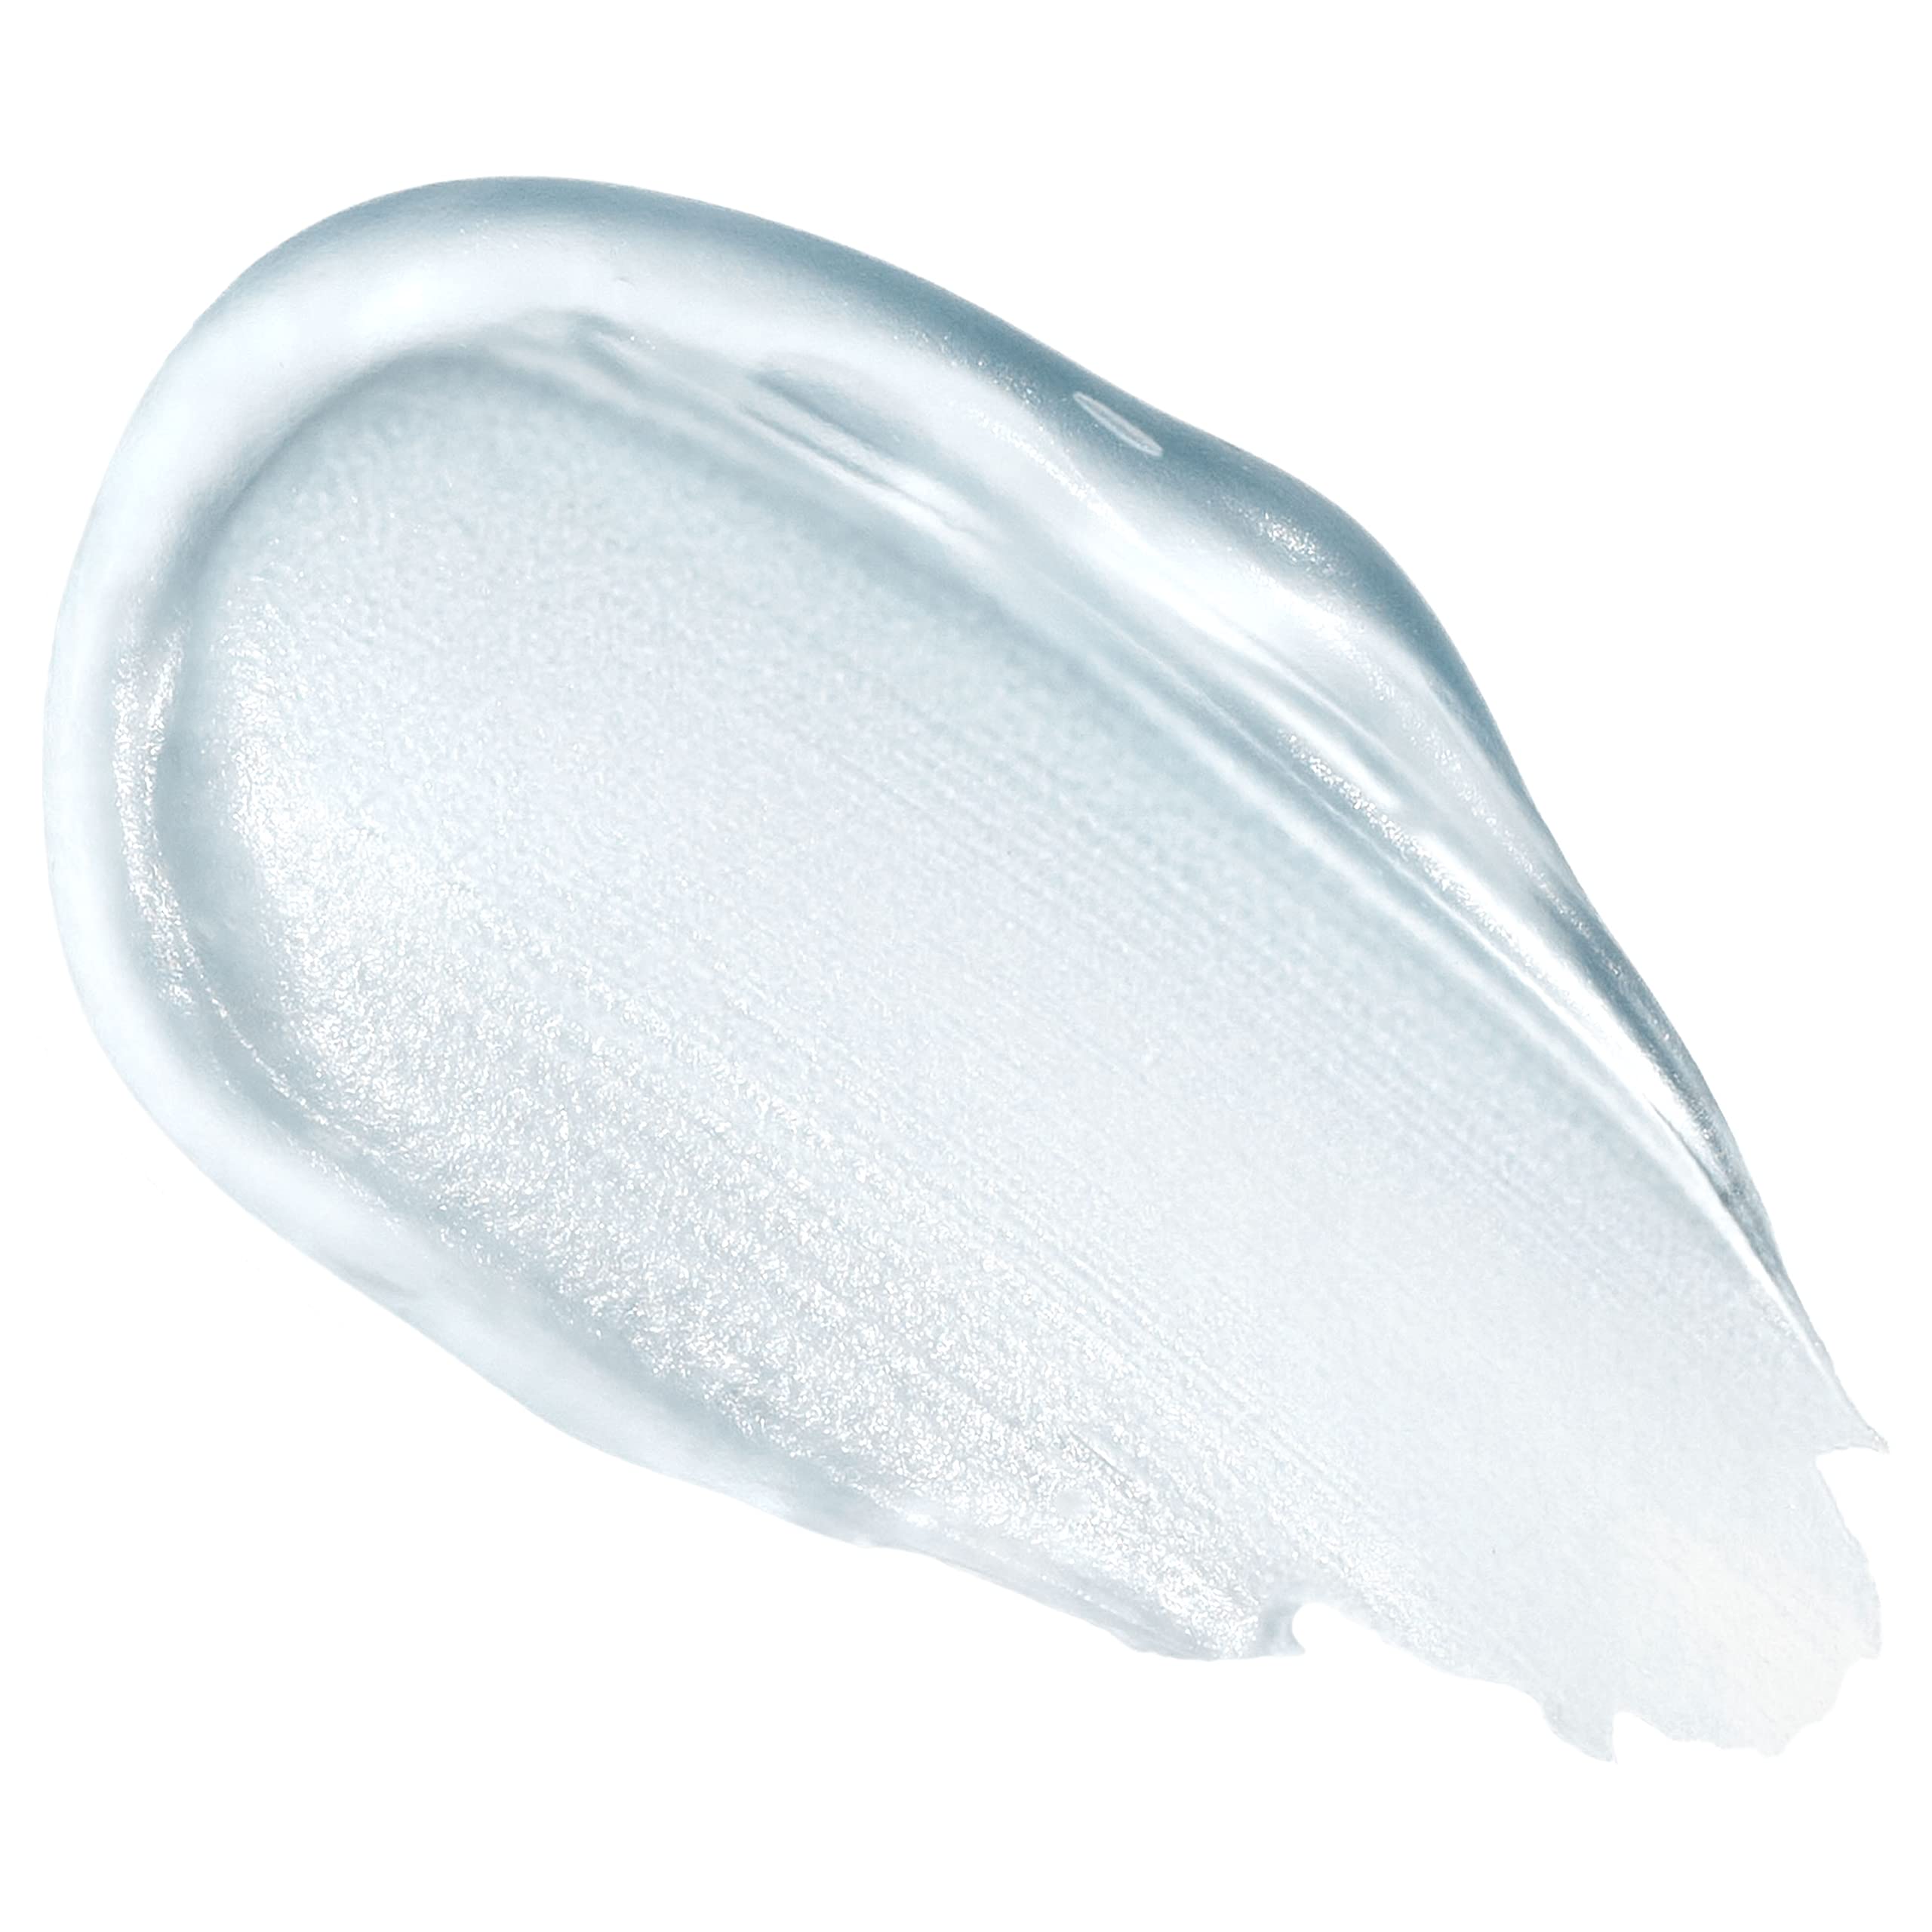 NYX PROFESSIONAL MAKEUP Face Freezie Cooling Primer + Moisturizer, 10-in-1 Make Up Prepping Skin Care